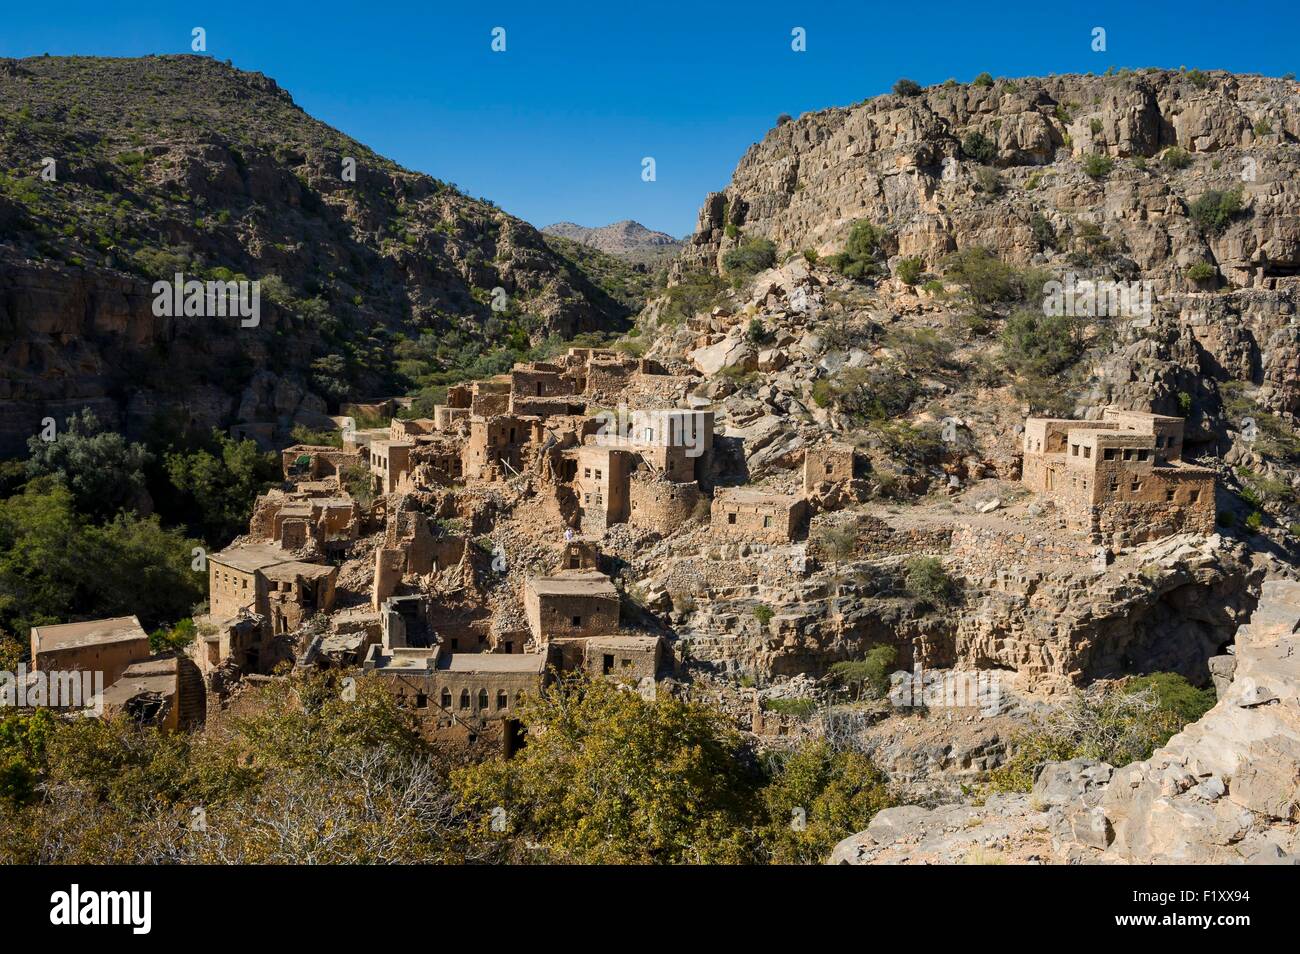 Oman, Ad-Dakhiliyah, Djebel Akhdar, Sayq Plateau, Wadi bani habib Stock Photo